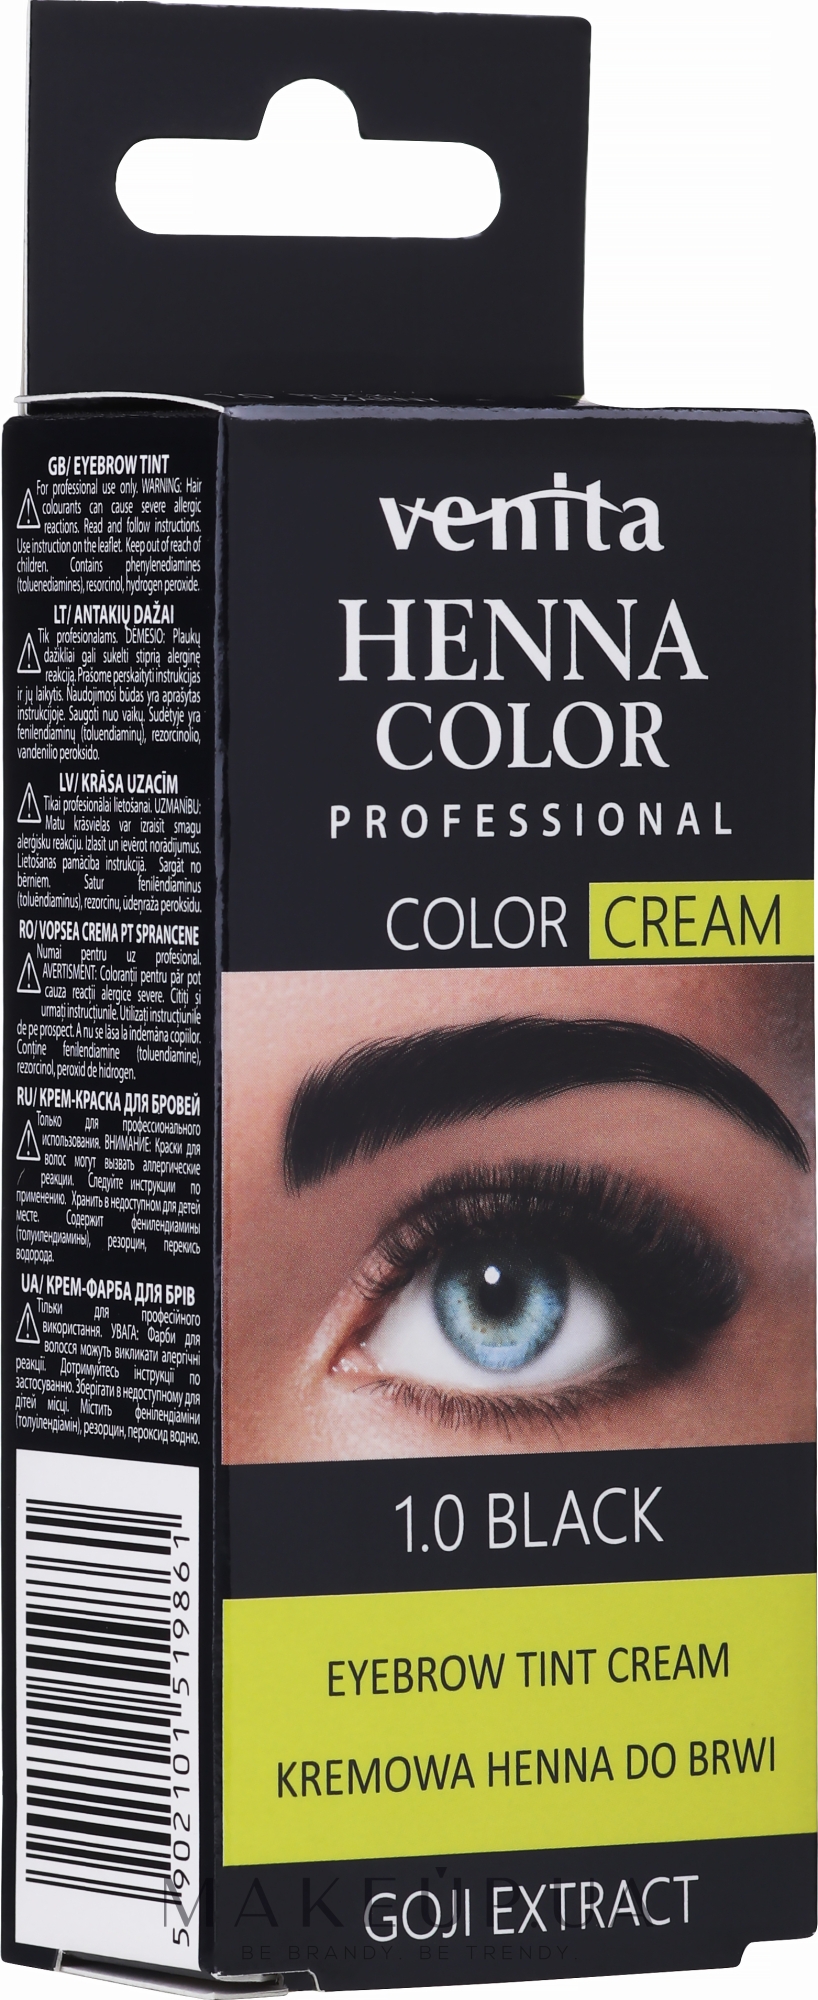 Venita Professional Henna Color Cream Eyebrow Tint Cream Goji Extract - Крем-фарба для фарбування брів з хною — фото 1.0 - Black